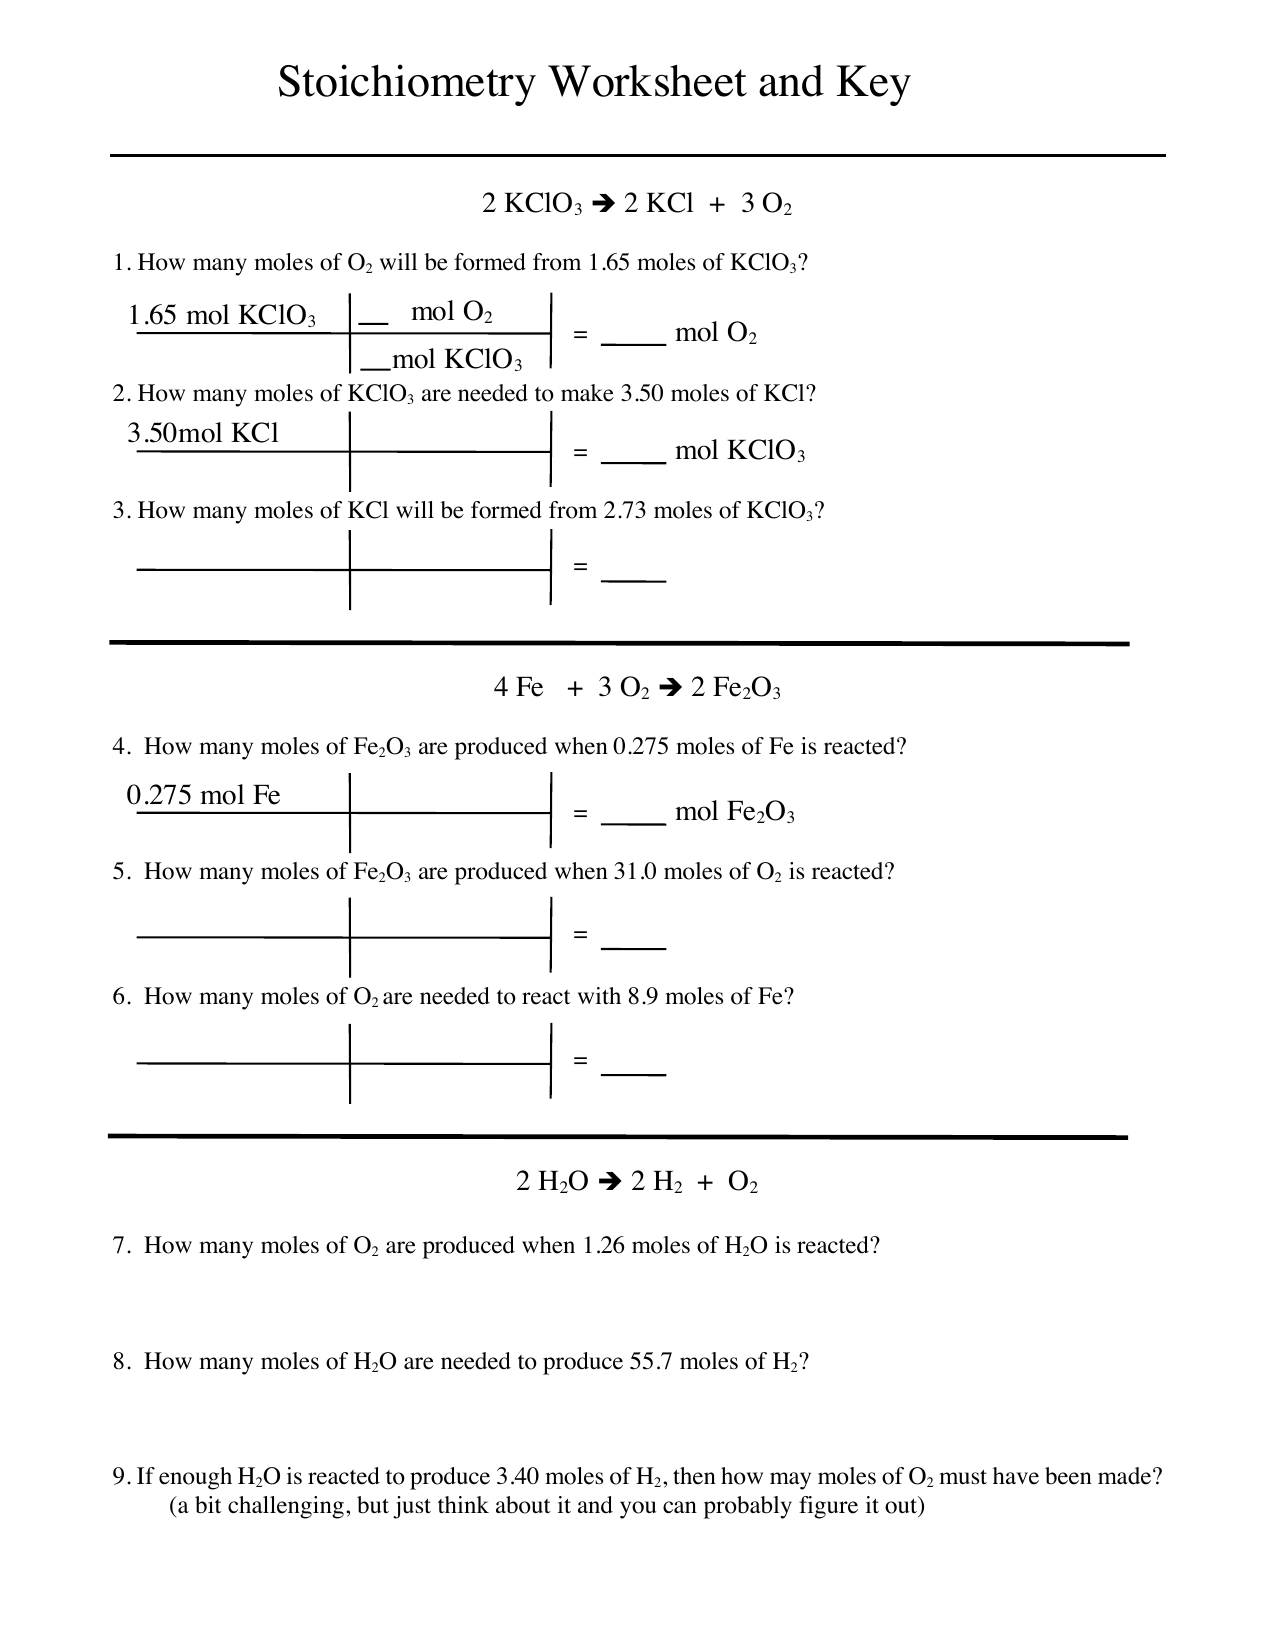 Stoichiometry Worksheet 1 Answers